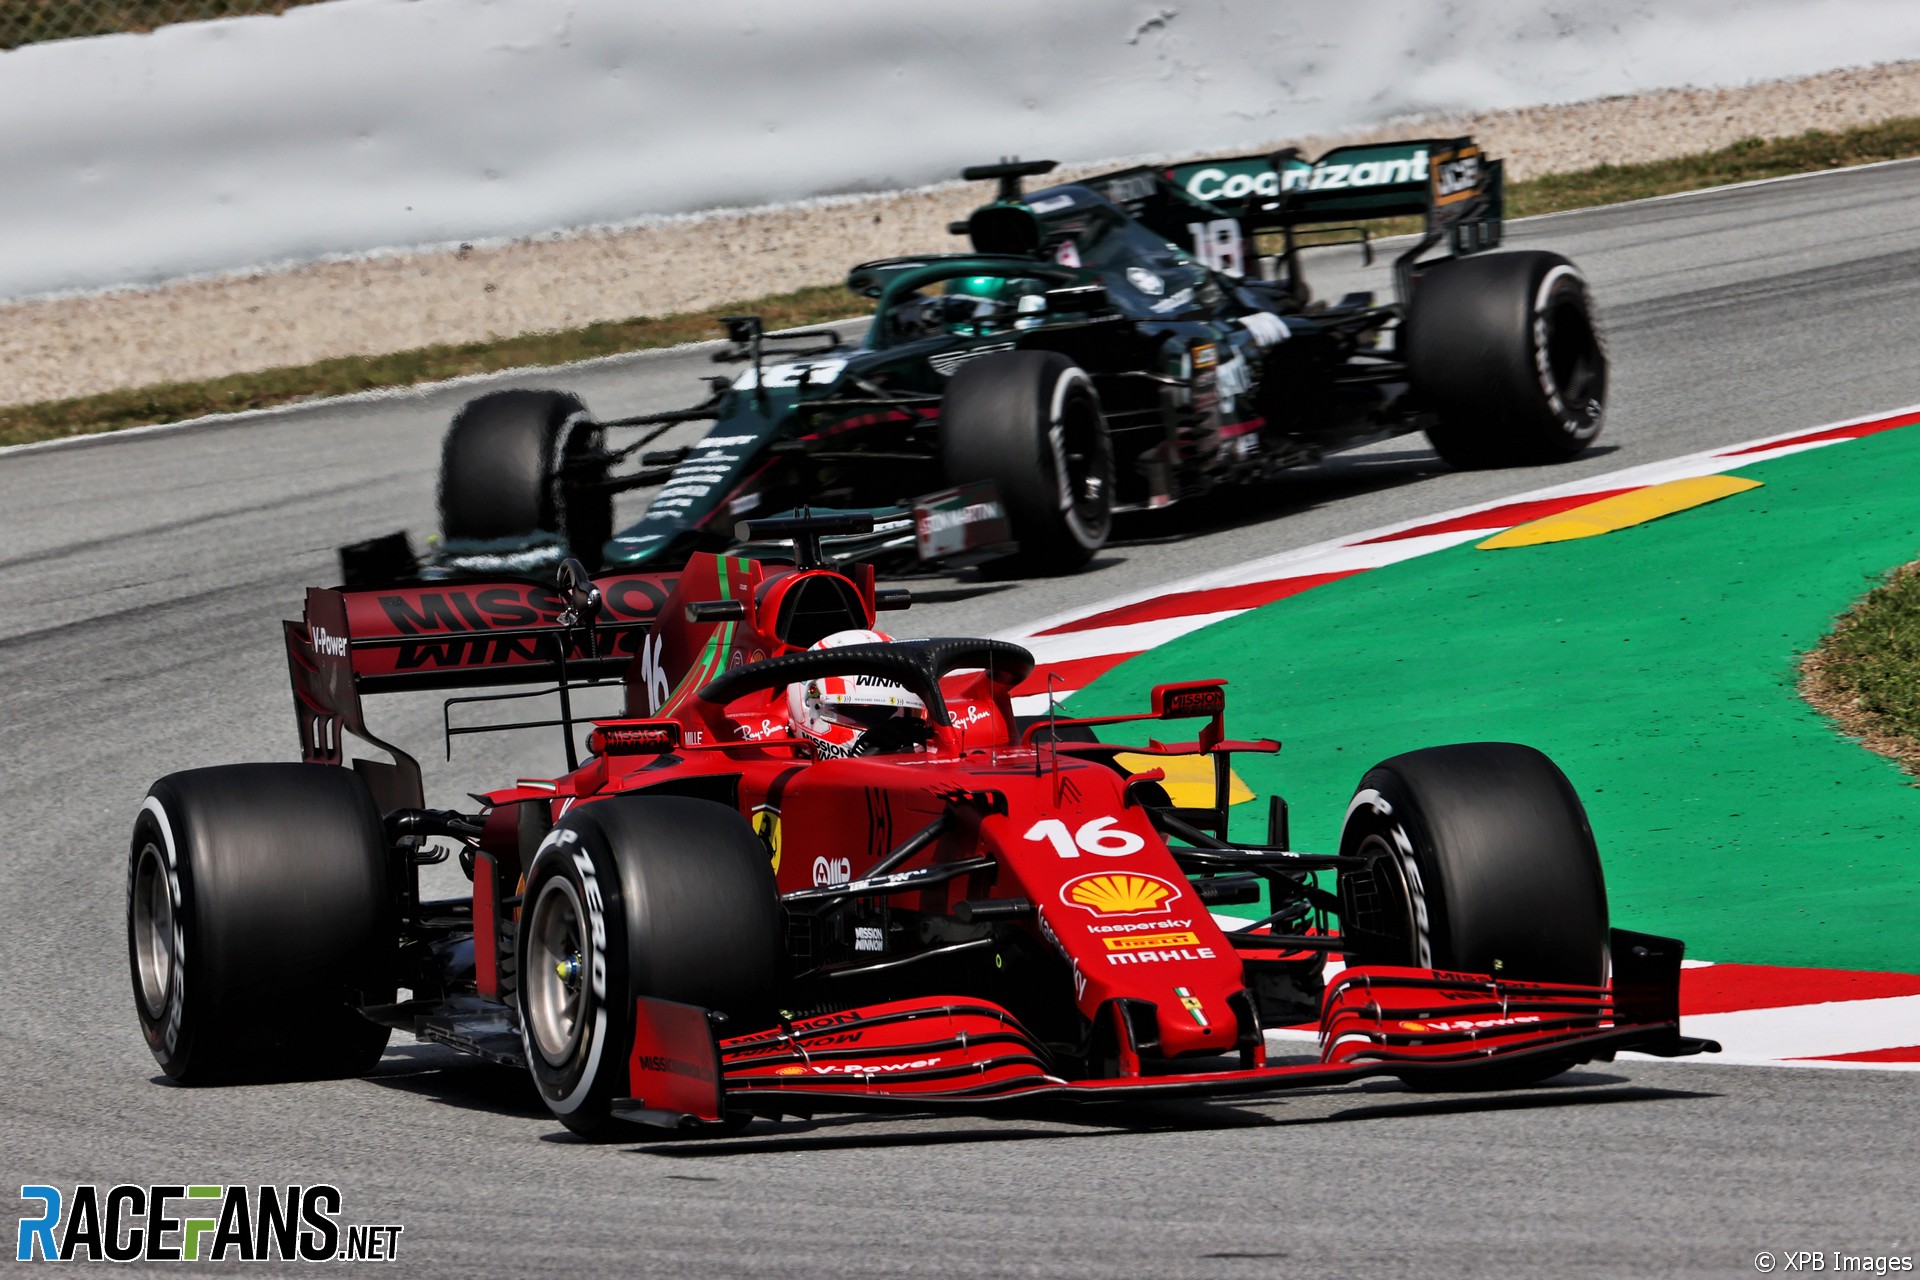 Charles Leclerc, Ferrari, Circuit de Catalunya, 2021